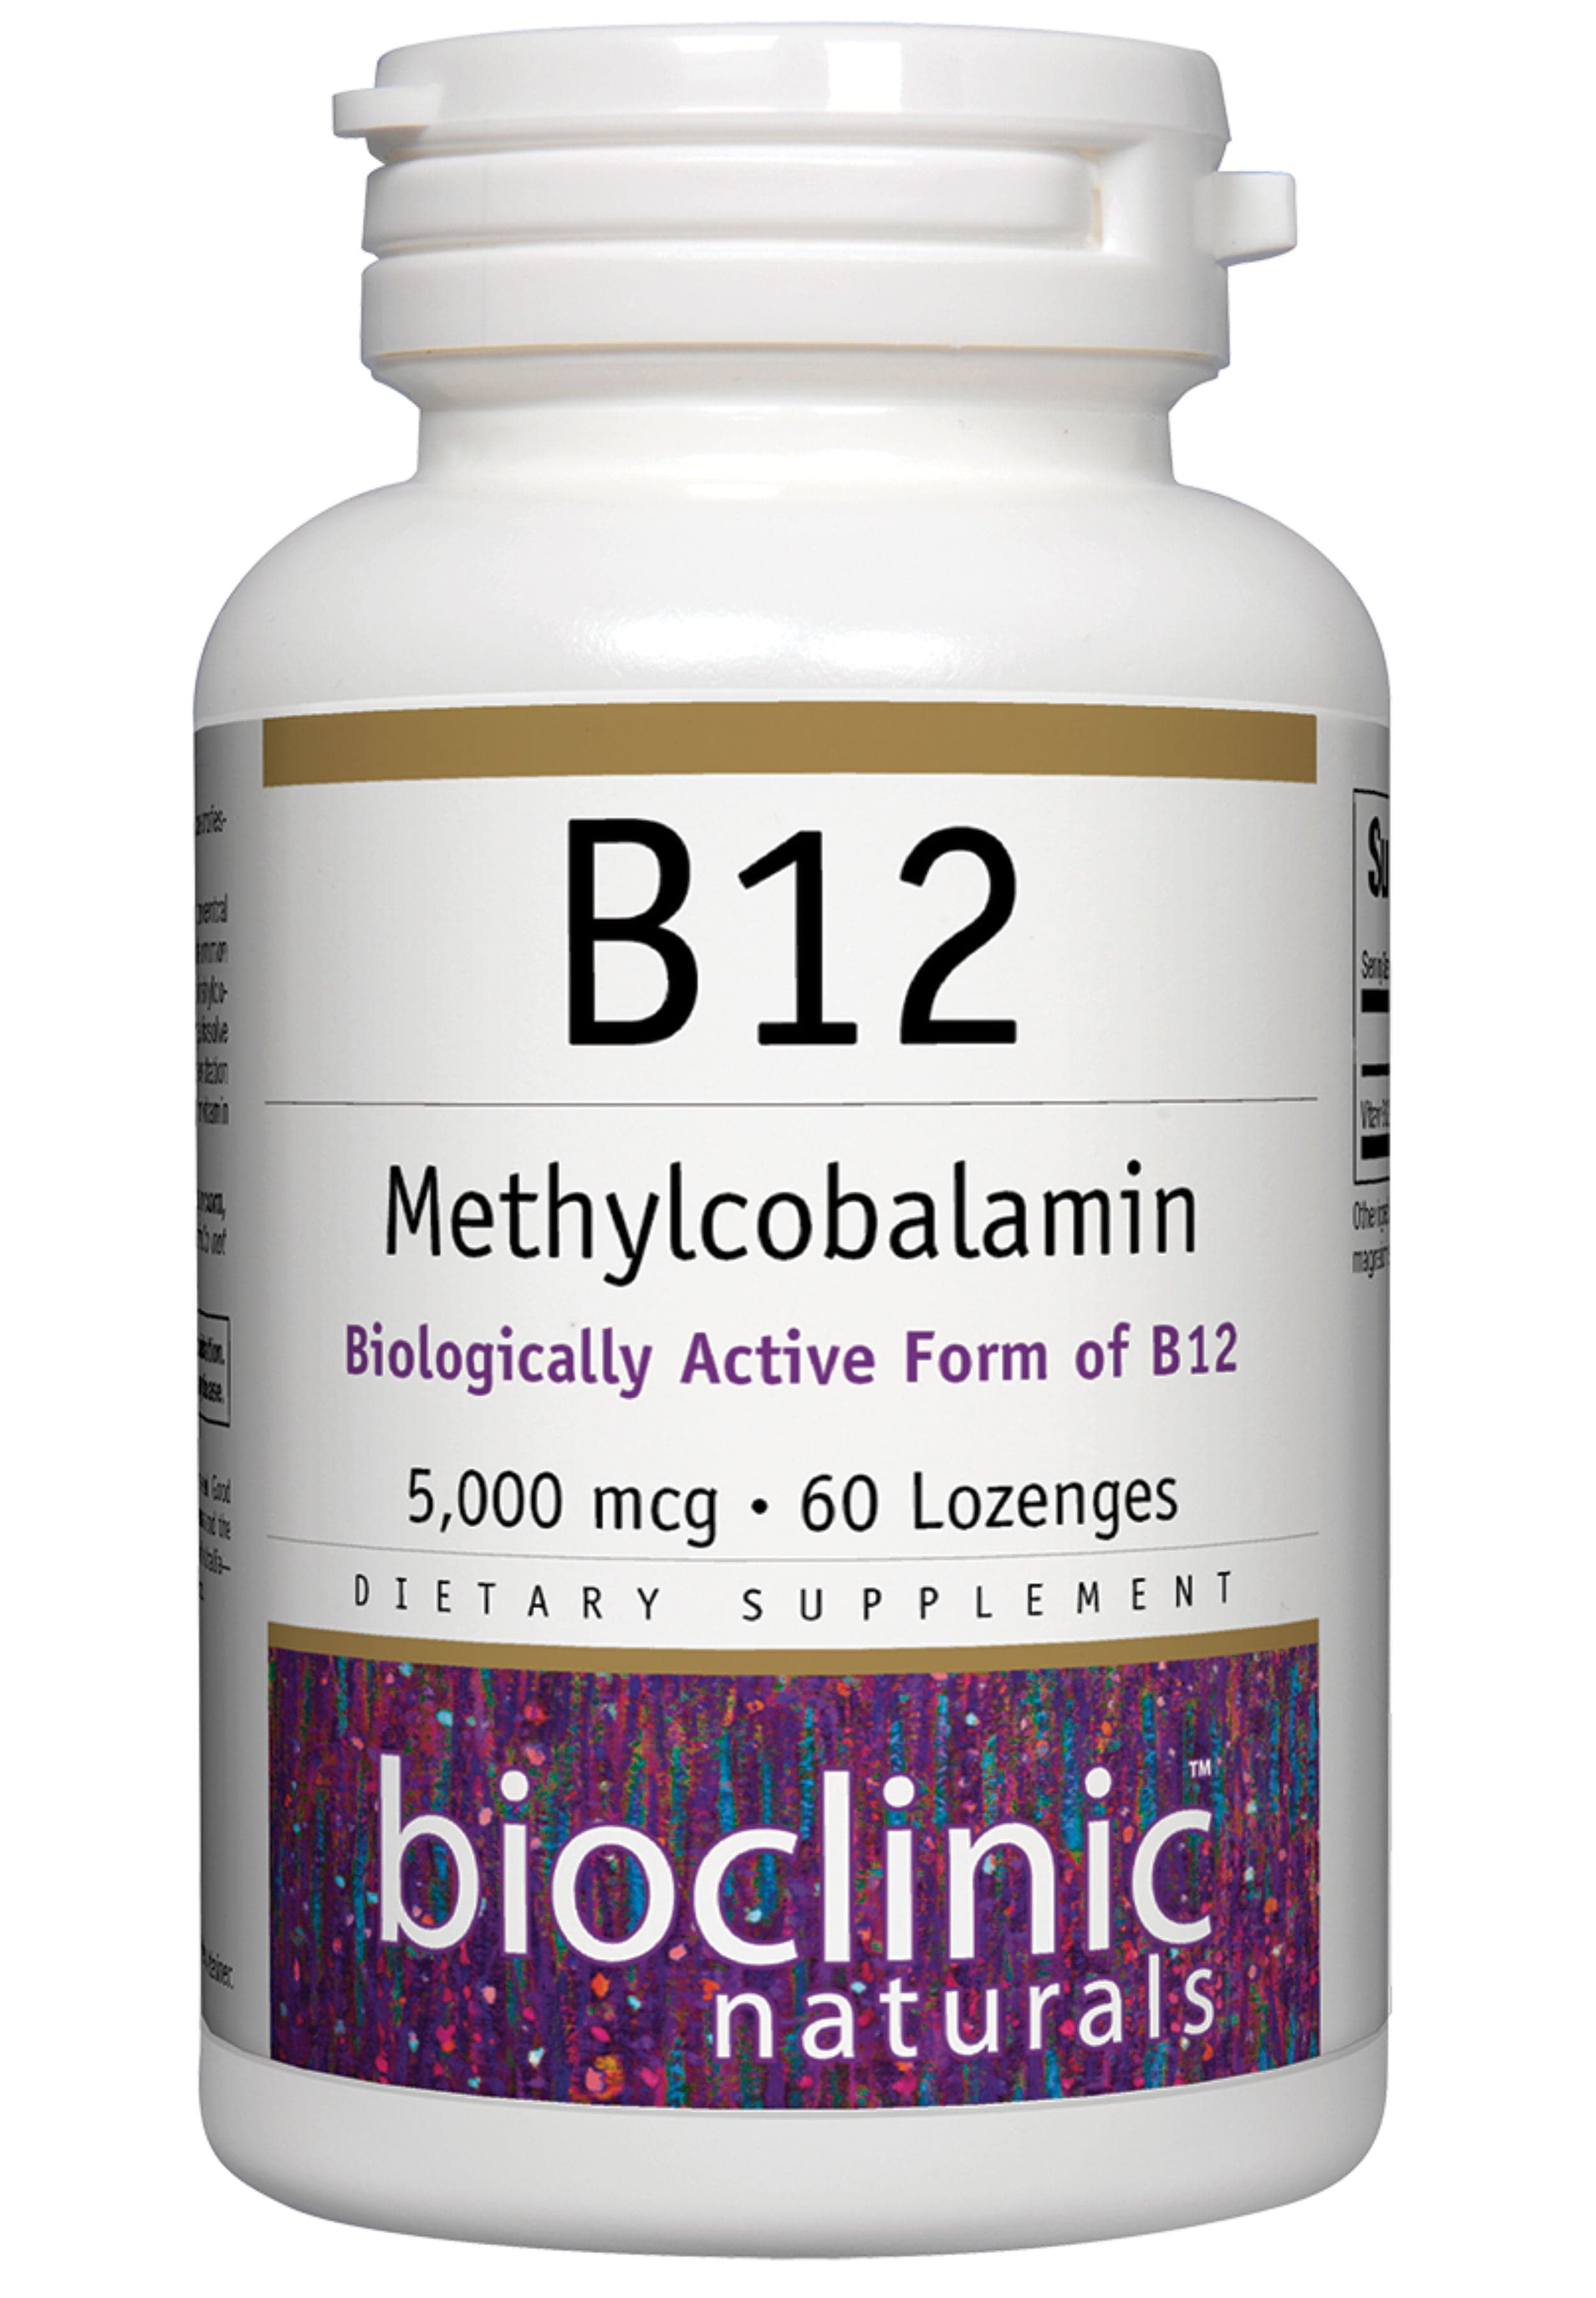 Bioclinic Naturals B12 Methylcobalamin 5000 mcg